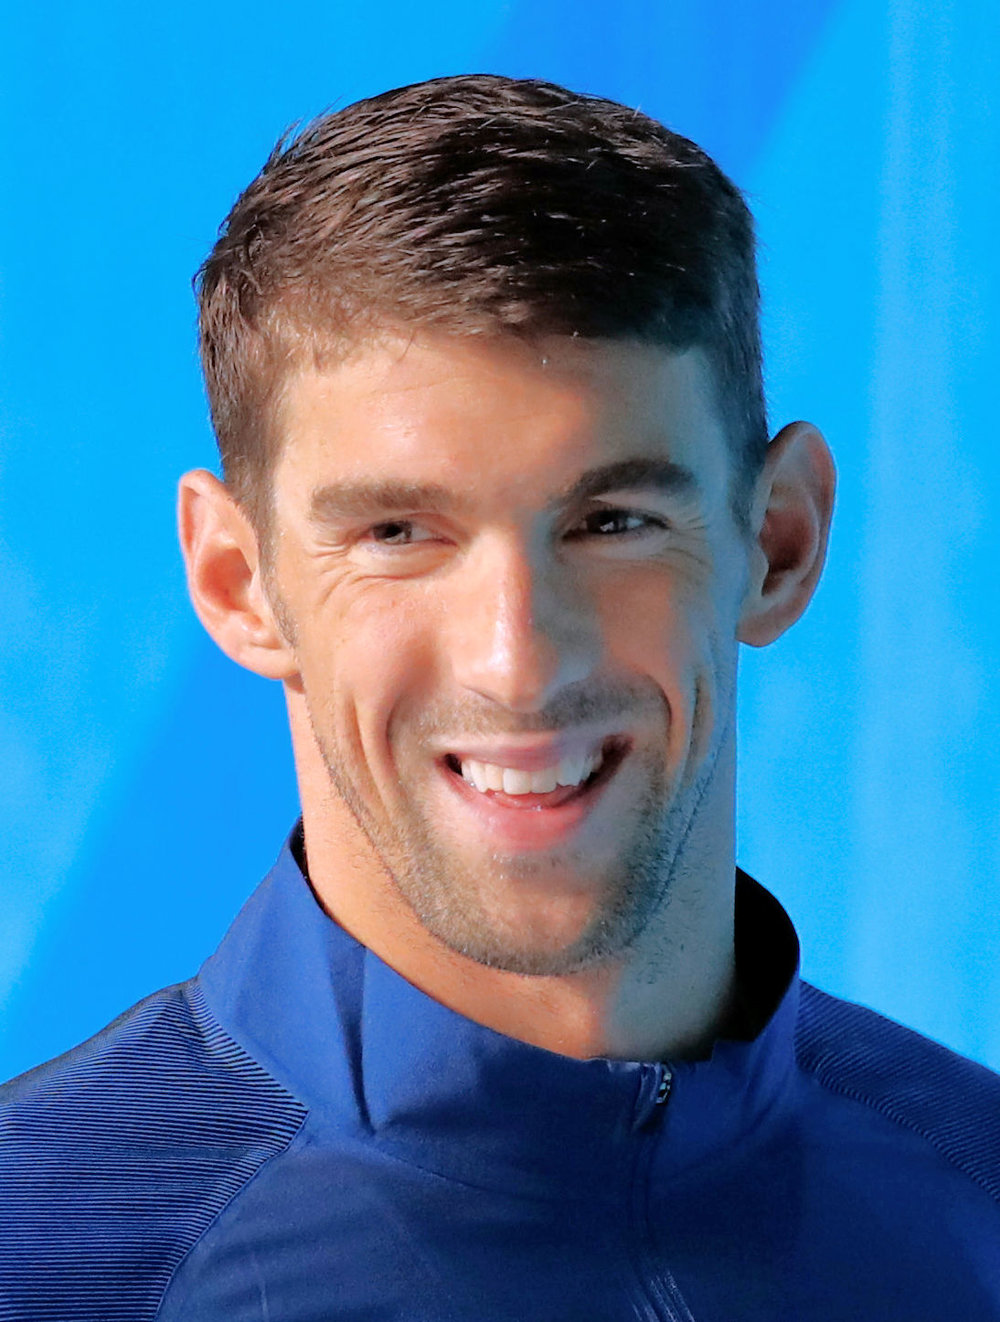  Michael Phelps Source: Wikipedia 